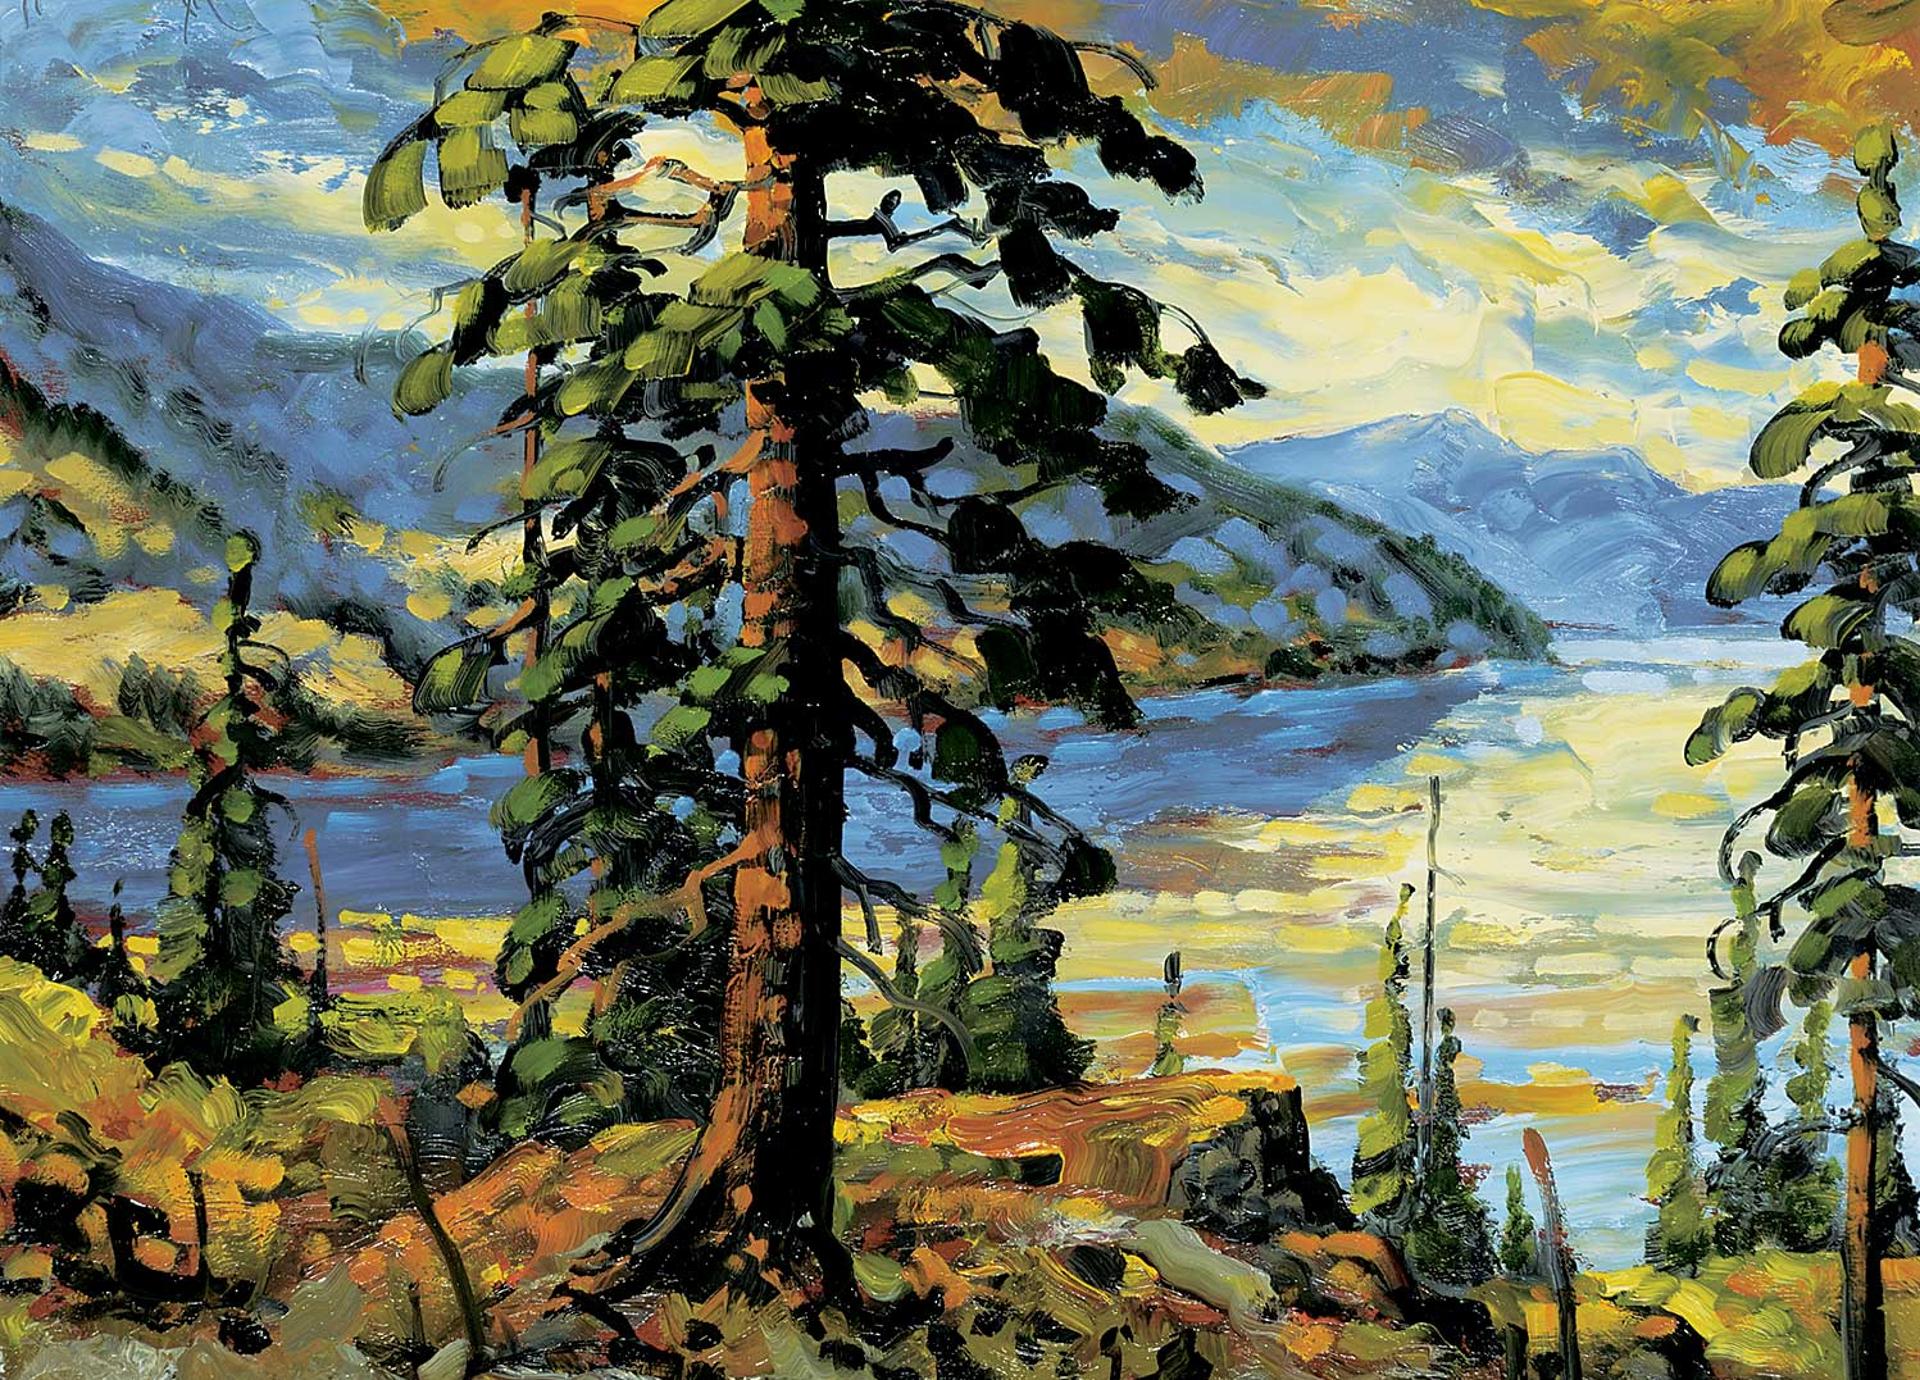 Rod Charlesworth (1955) - Okanagan Lake, North Vista